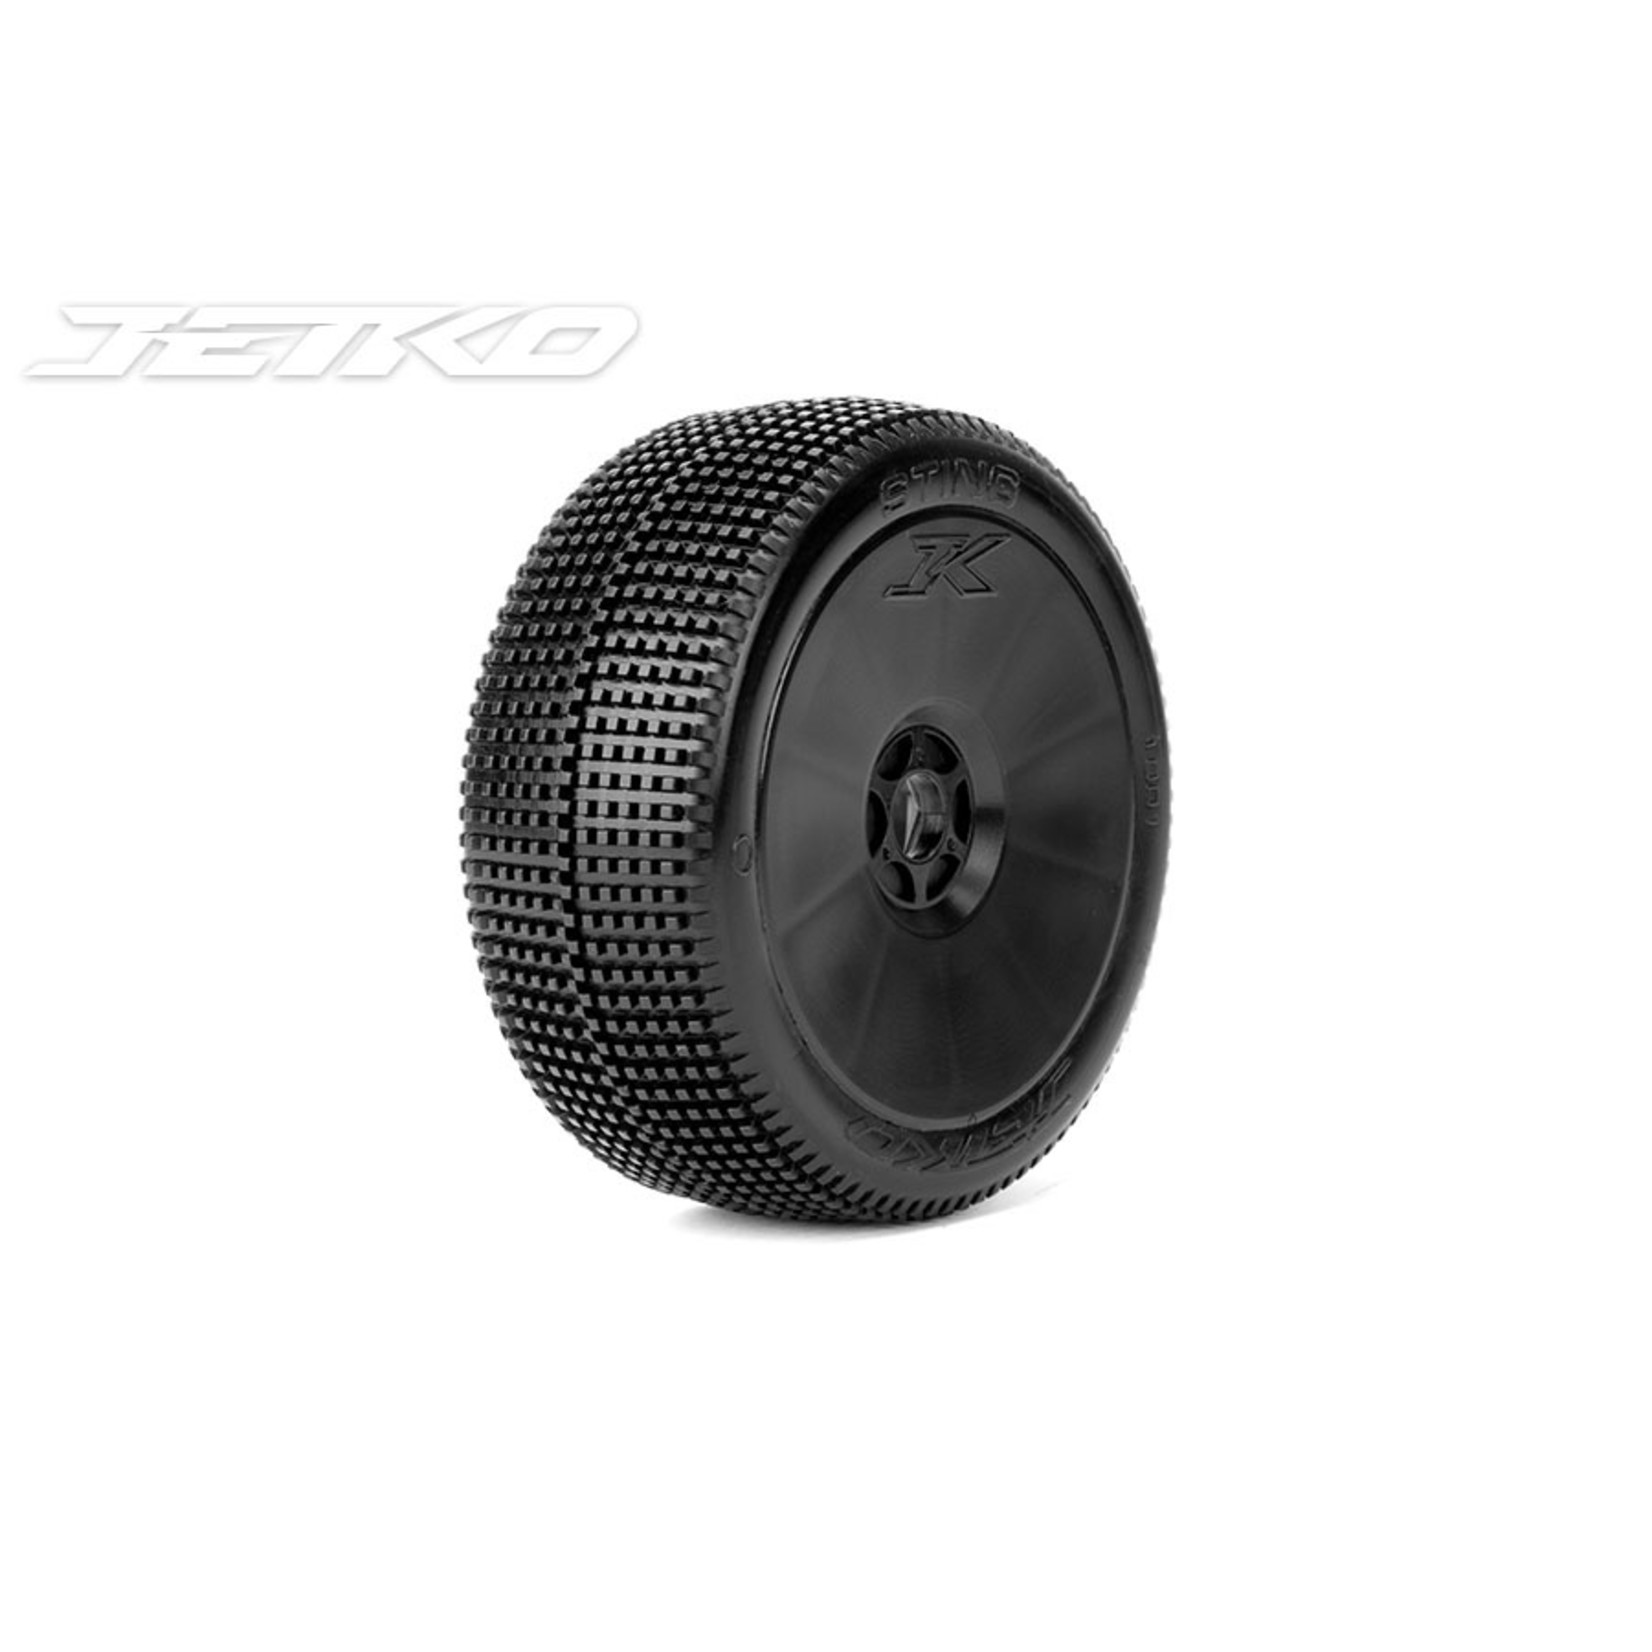 Jetko Tires JKO1001DBMSG  Sting 1/8 Buggy Tires Mounted on Black Dish Rims, Medium